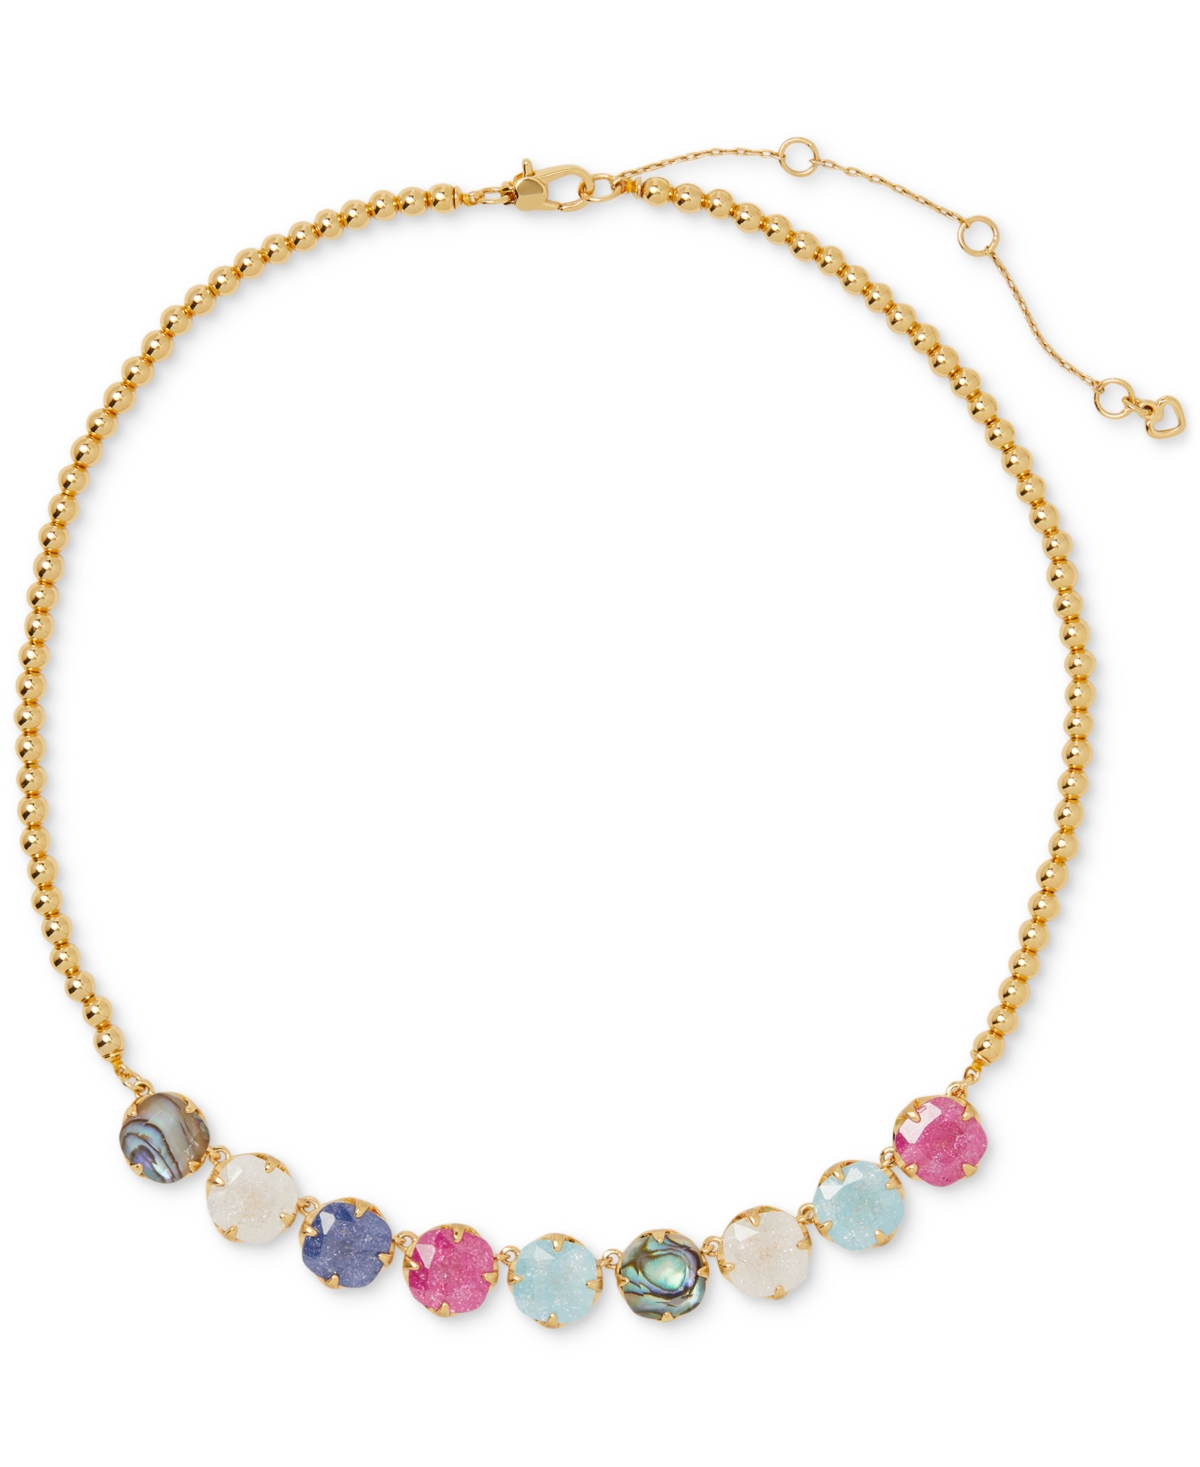 Gold-Tone Pop of Joy Spade Flower Necklace, 16" + 3" extender - Multi